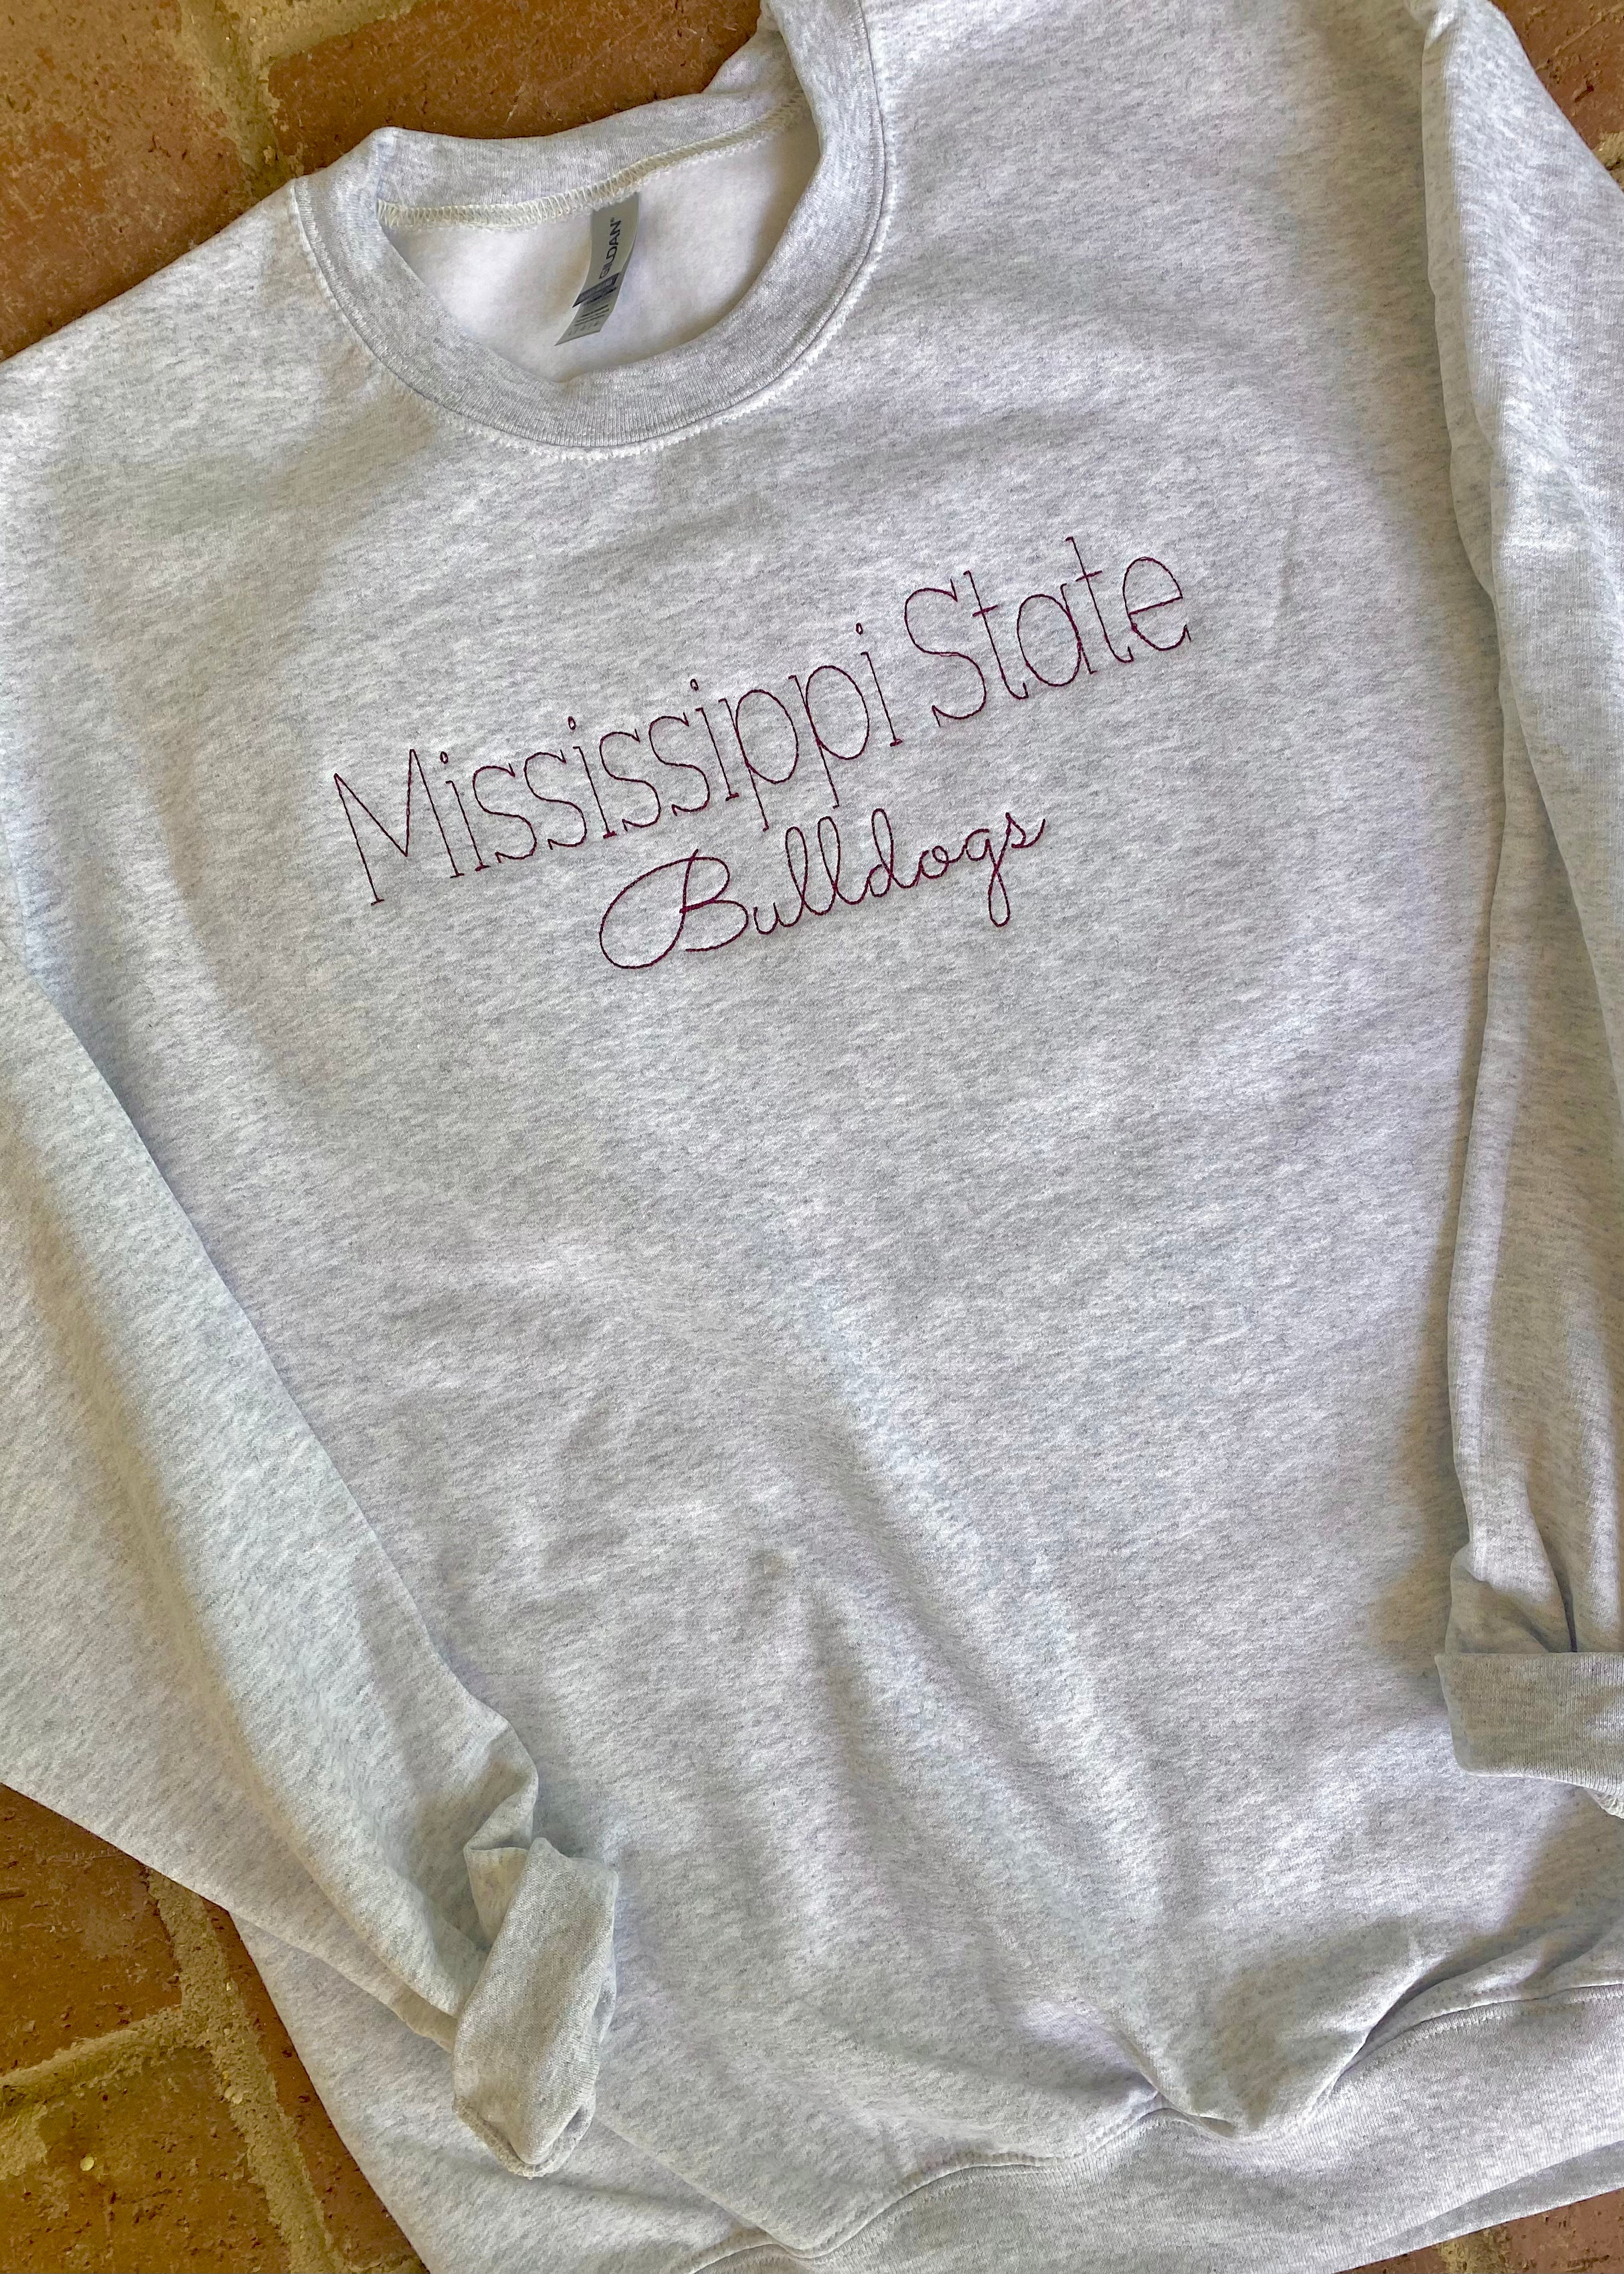 Mississippi State Stitched Sweatshirt - Light Grey - Jimberly's Boutique